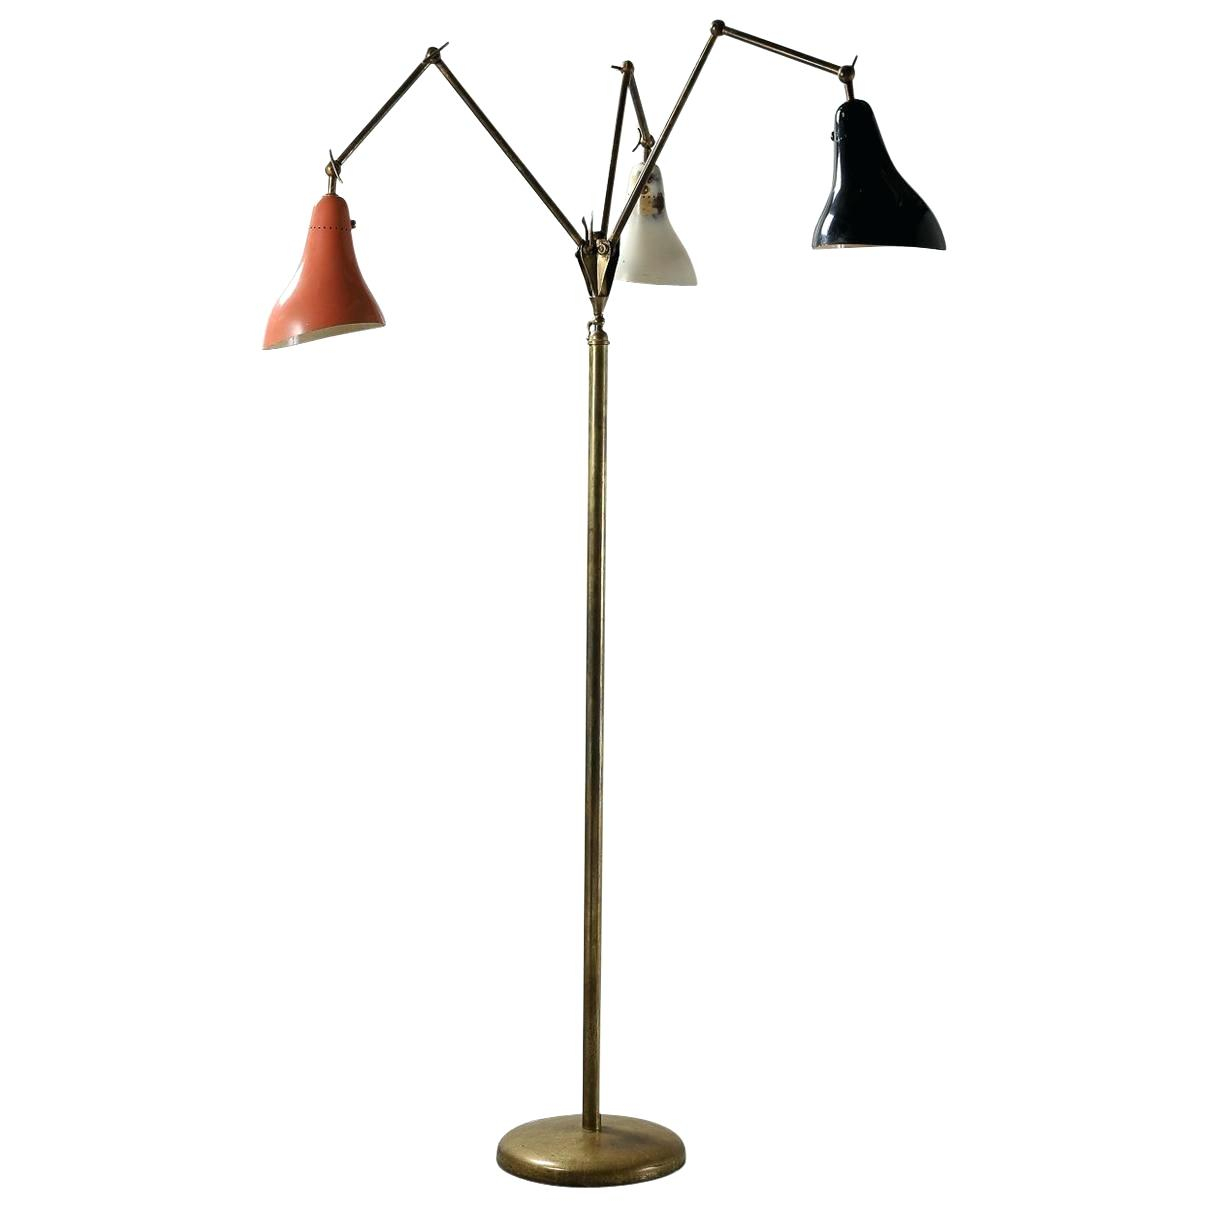 3 Arm Floor Lamp Restaurantecarpaccio with regard to size 1208 X 1208